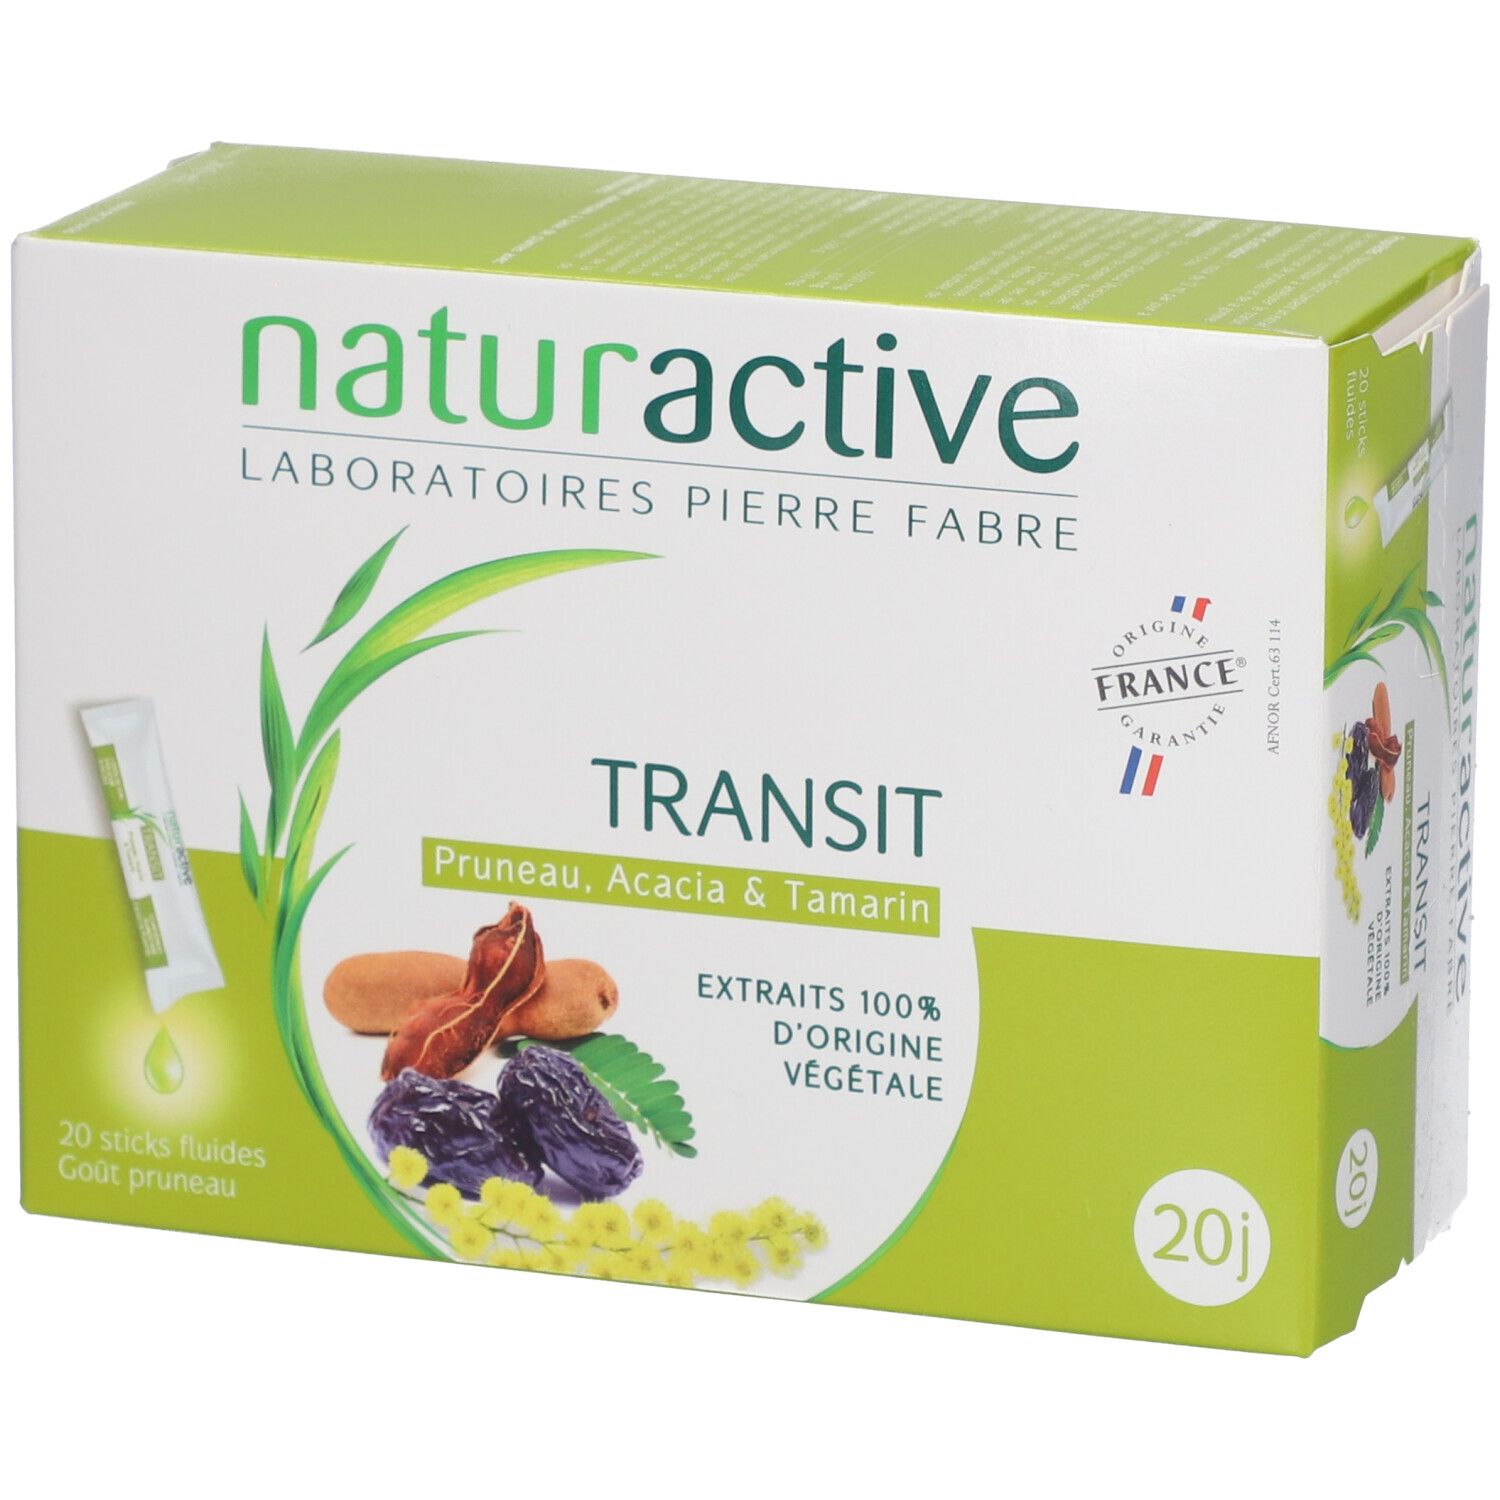 Naturactive Transit Stick fluide